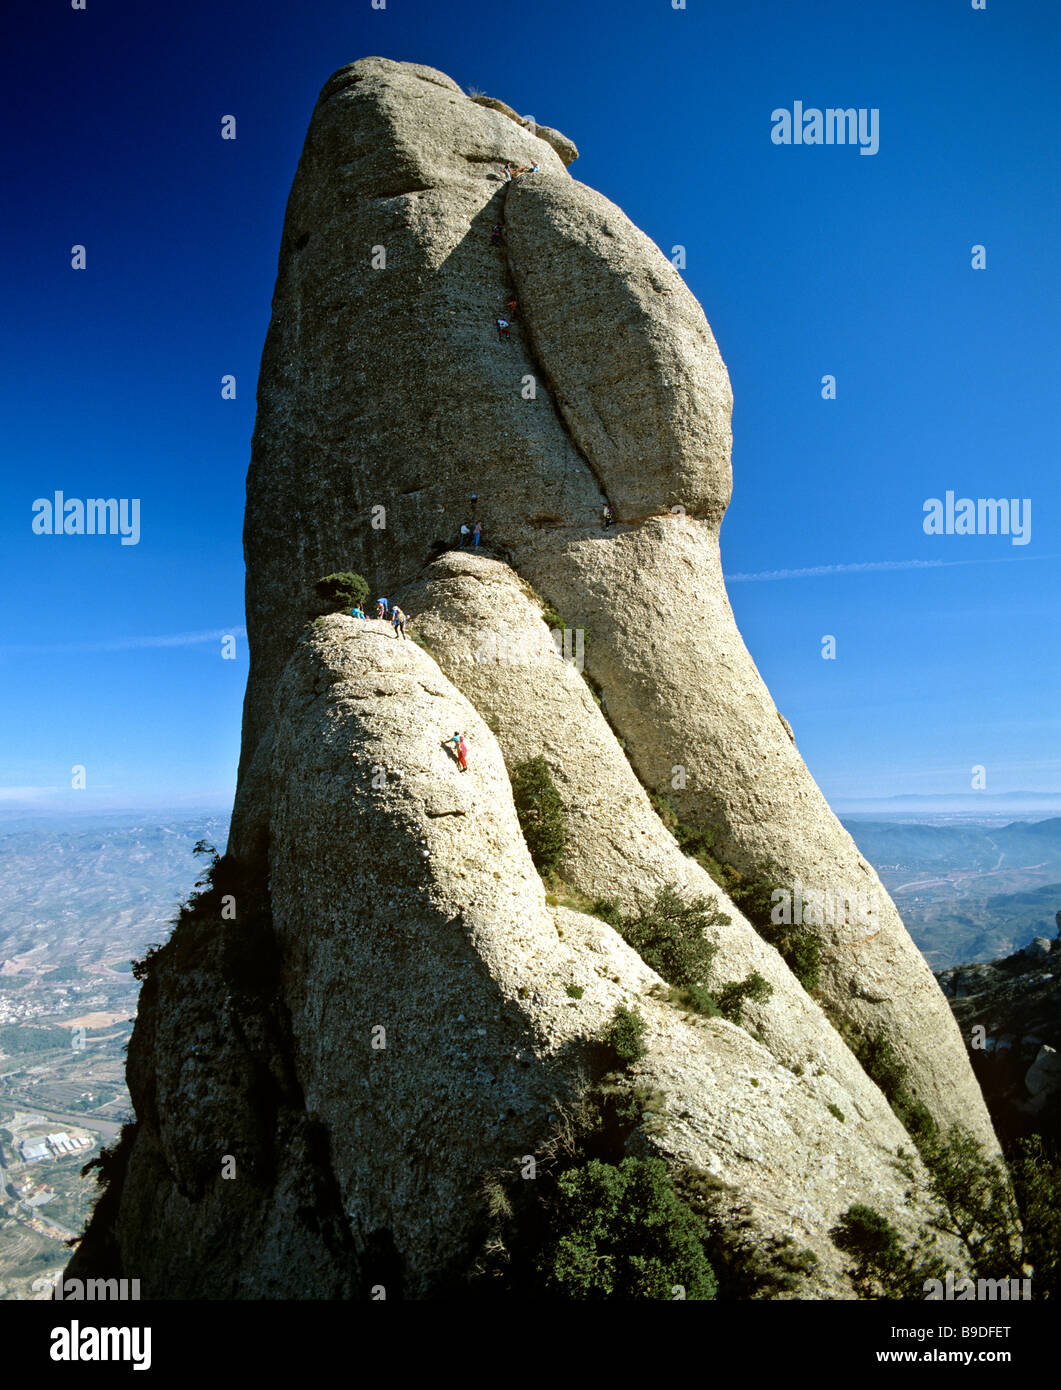 Mt. Cavall Bernat, mountain climber, Montserrat, Barcelona, Catalonia, Spain Stock Photo